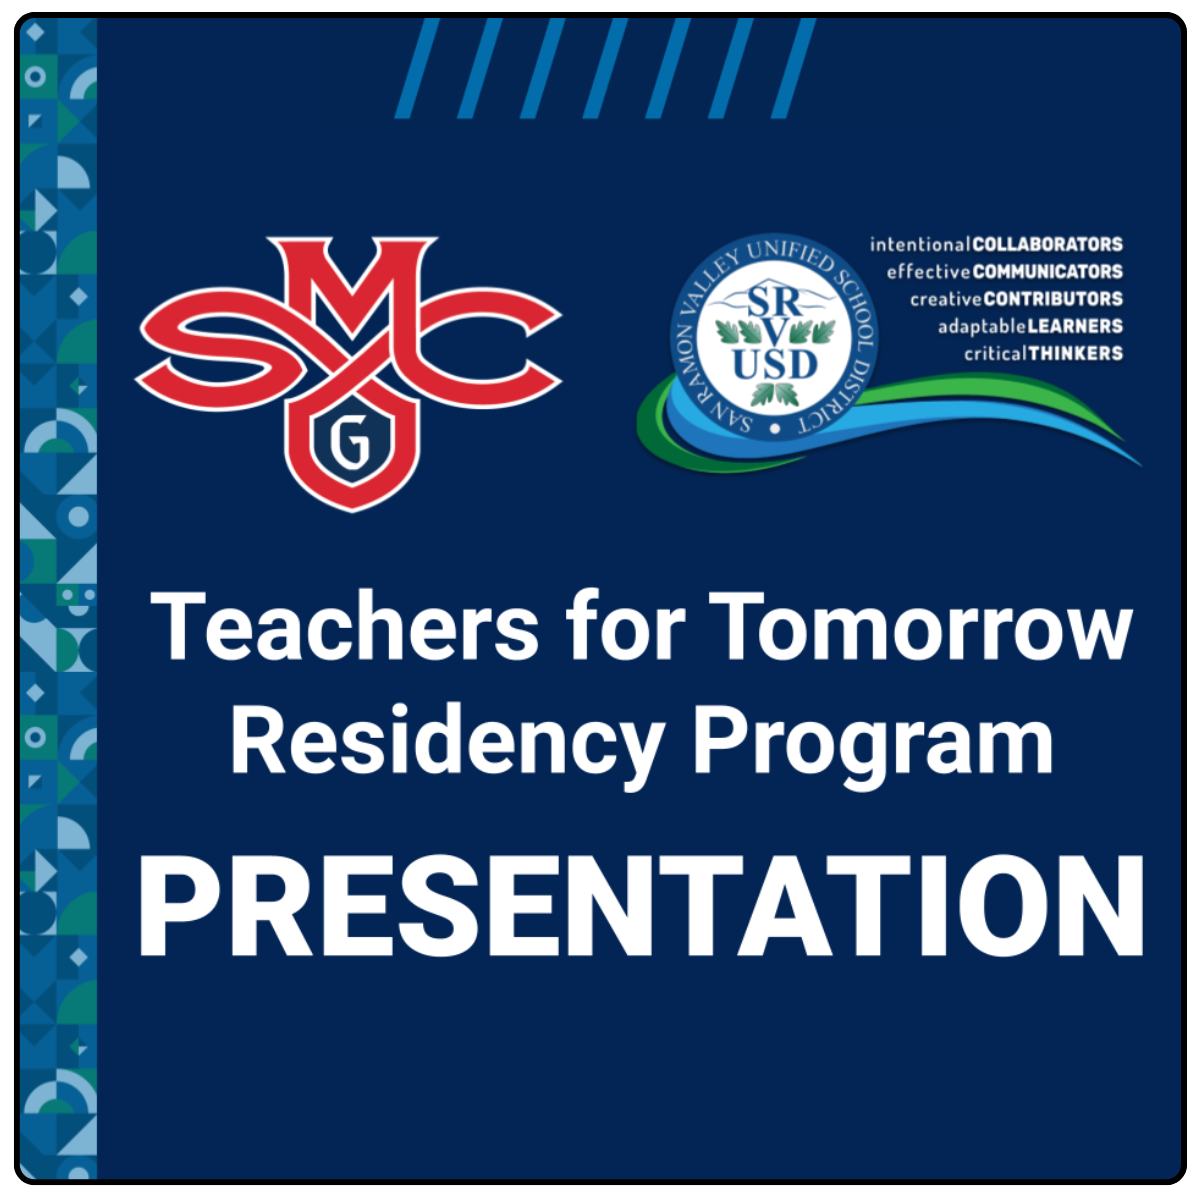 Teachers for Tomorrow Presentation thumbnail & link